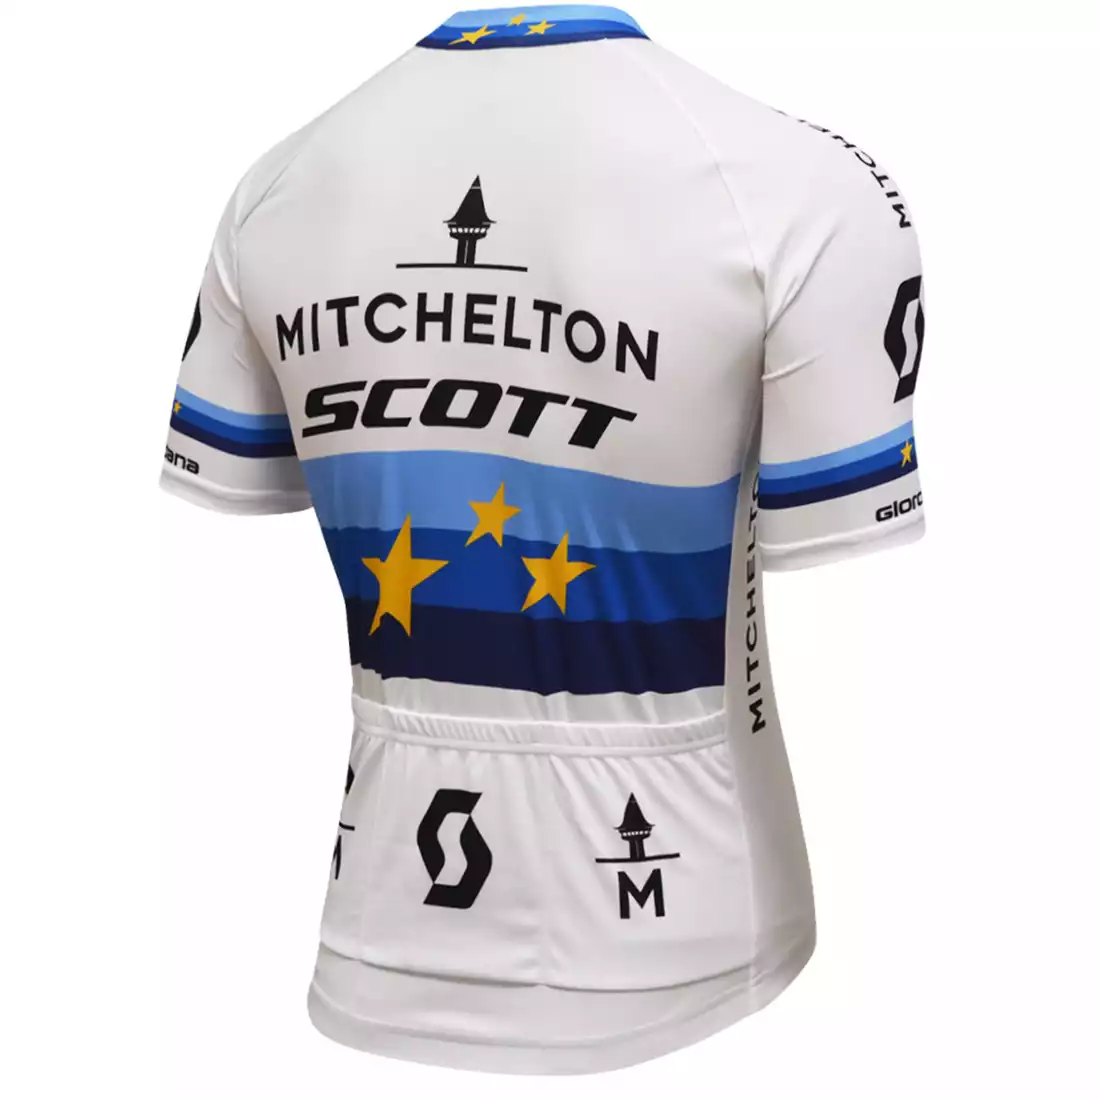 GIORDANA VERO PRO SCOTT MITCHELTON EUROPEAN CHAMPION koszulka rowerowa